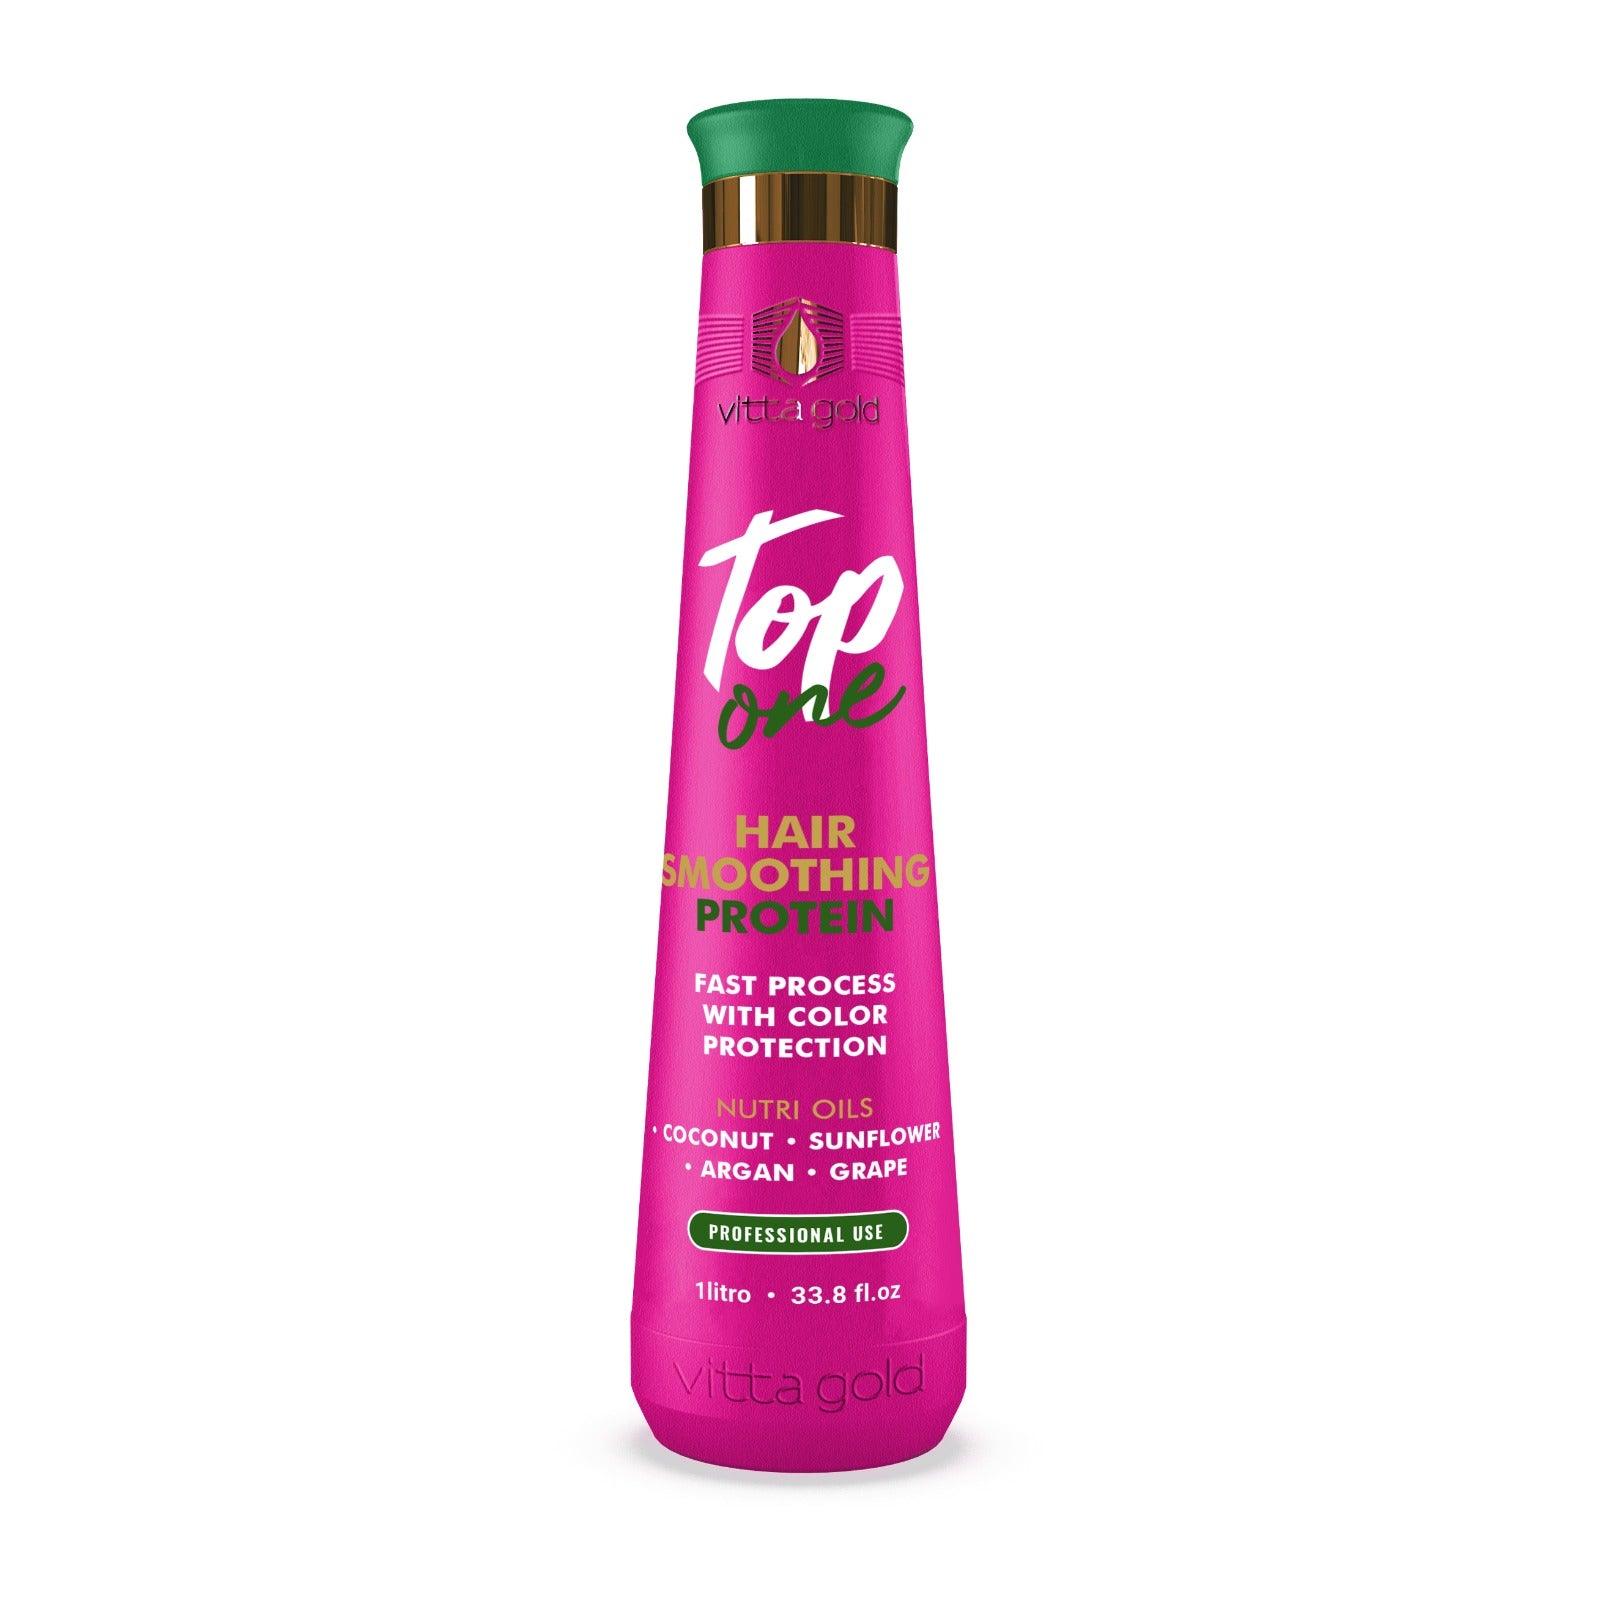 Top One™ Lissage des cheveux Nutri Protein 1L/1000ml (33.8 fl. oz) - Vitta Gold™ Mondial